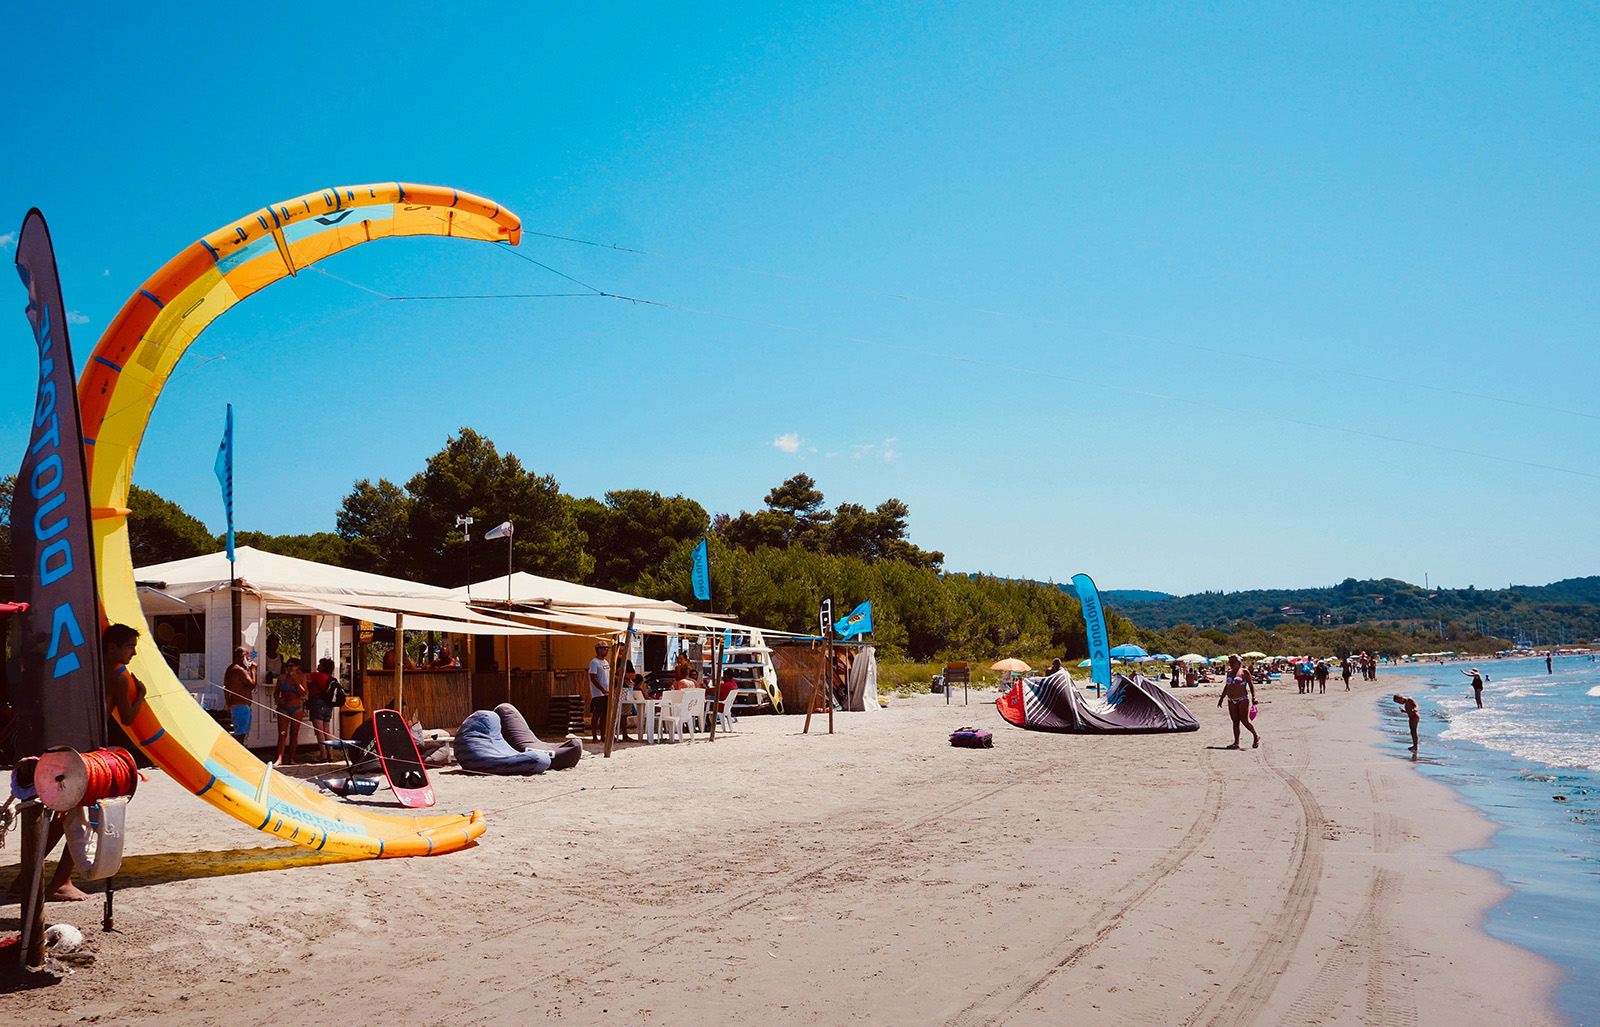 Kite launch at Surf Relax kite centre, Puntone beach.